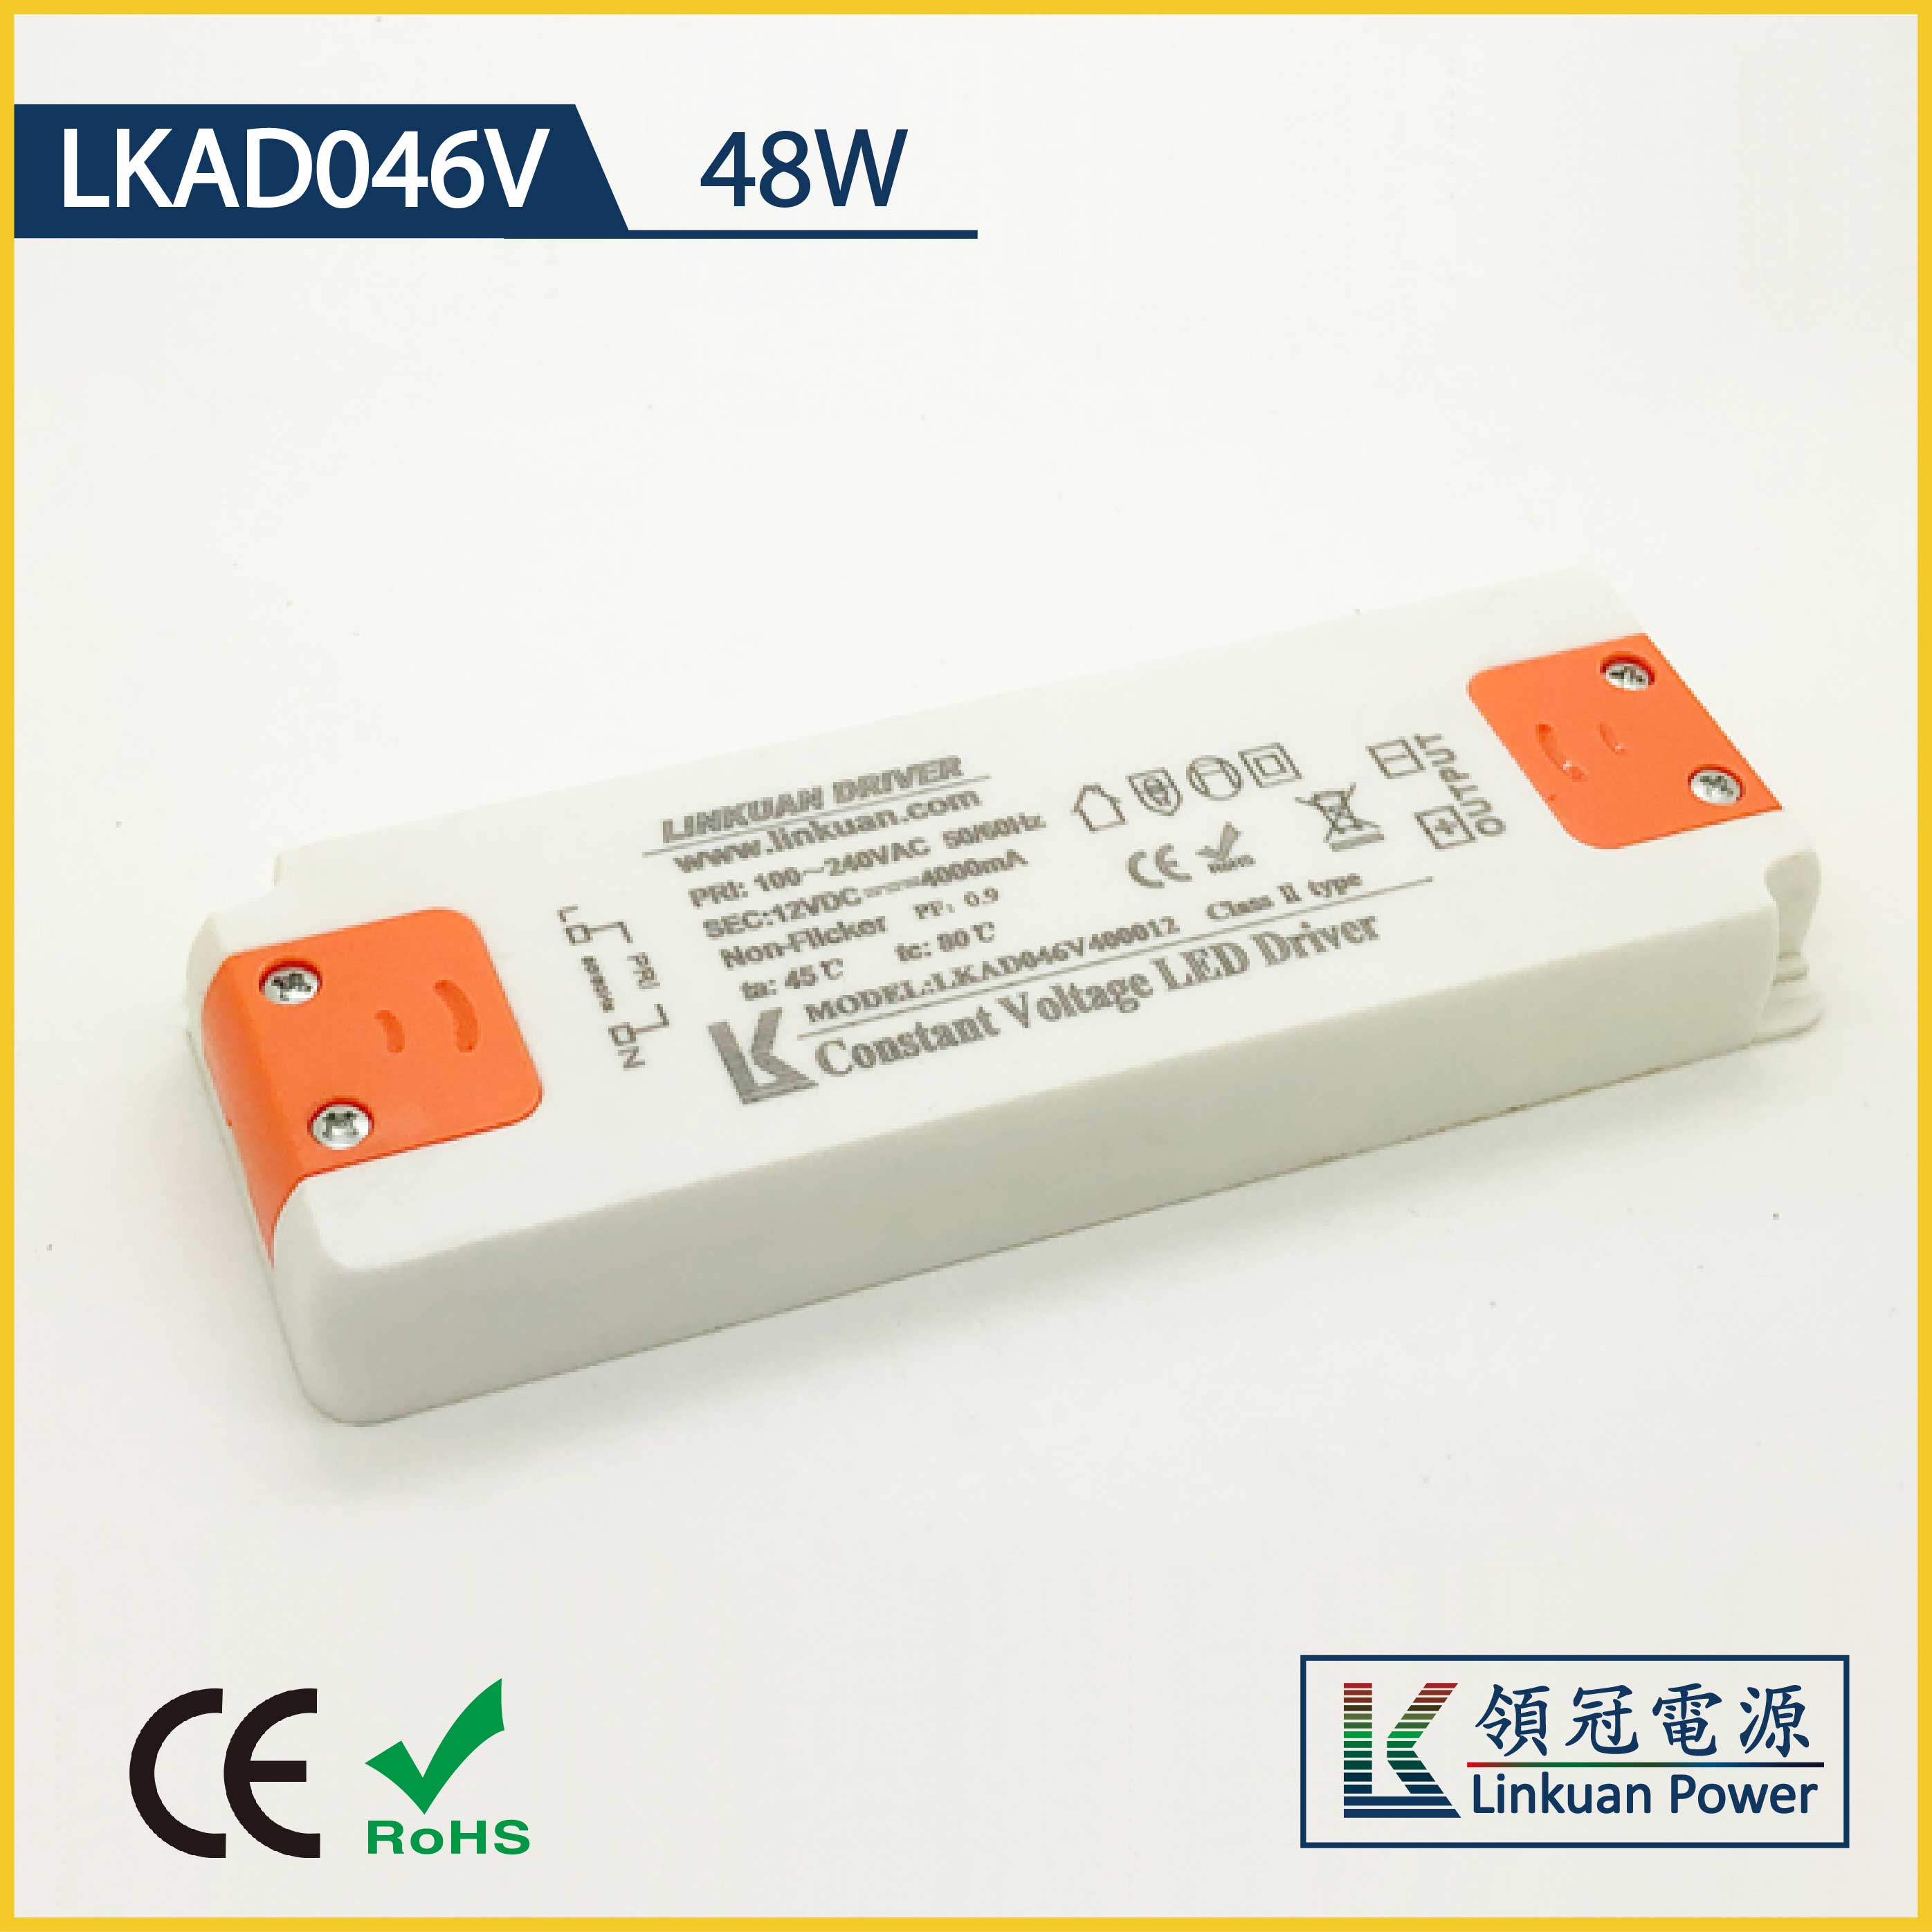 LKAD046V 48W constant voltage 12V/24V 4A/2A slim led driver